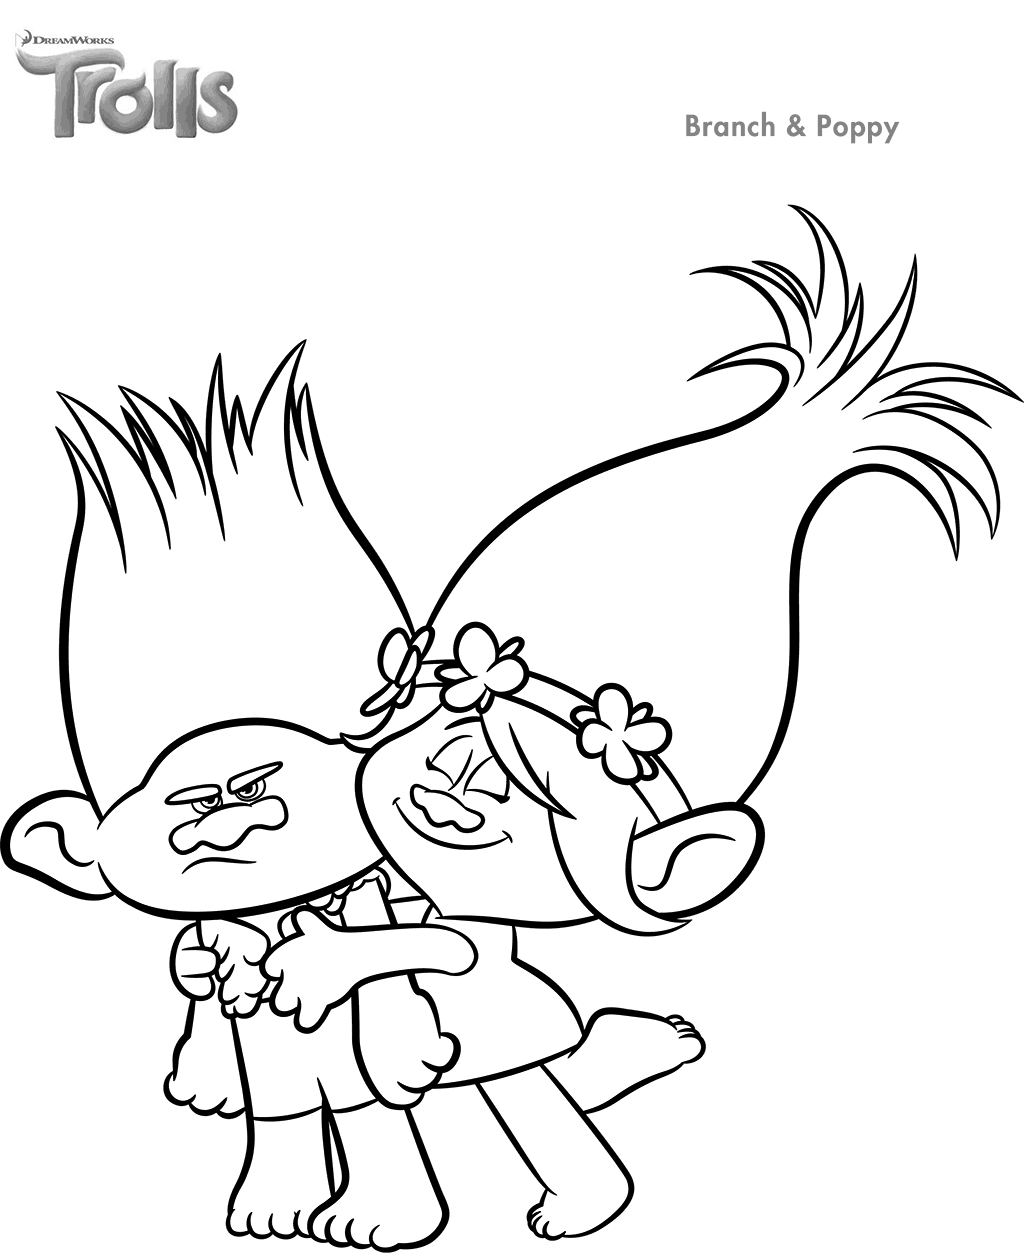 DreamWorks Trolls Party Edition - Princess Poppy Coloring Sheets Printable  #TrollsFHEInsider…